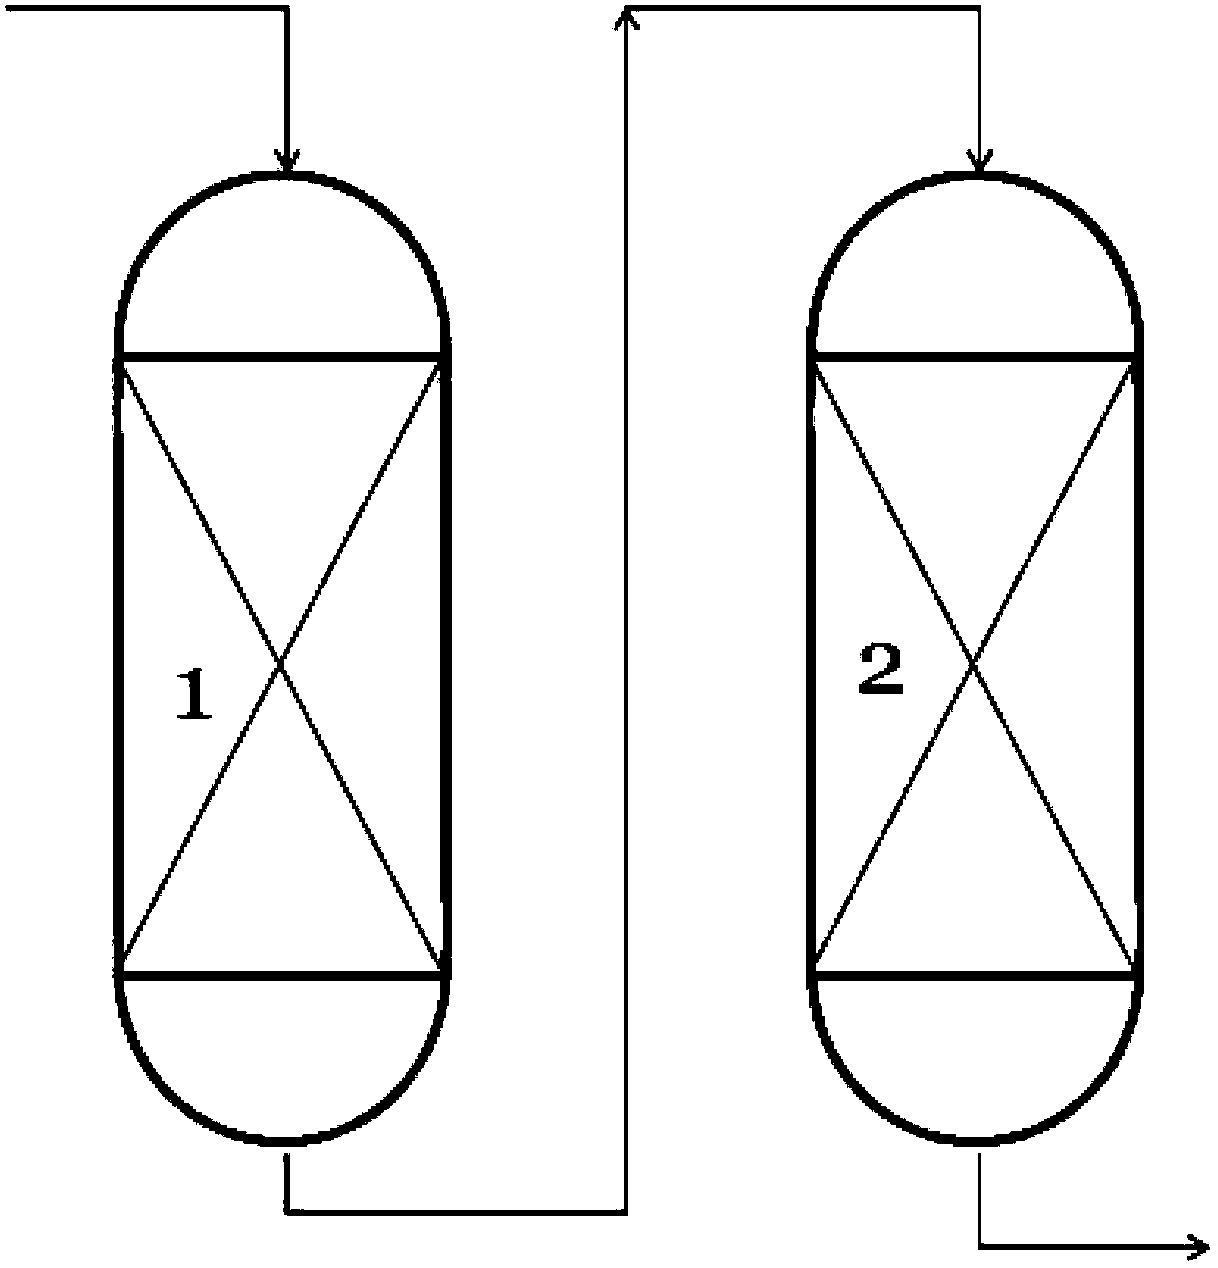 Method for preparing cyclohexane by hydrogenating benzene